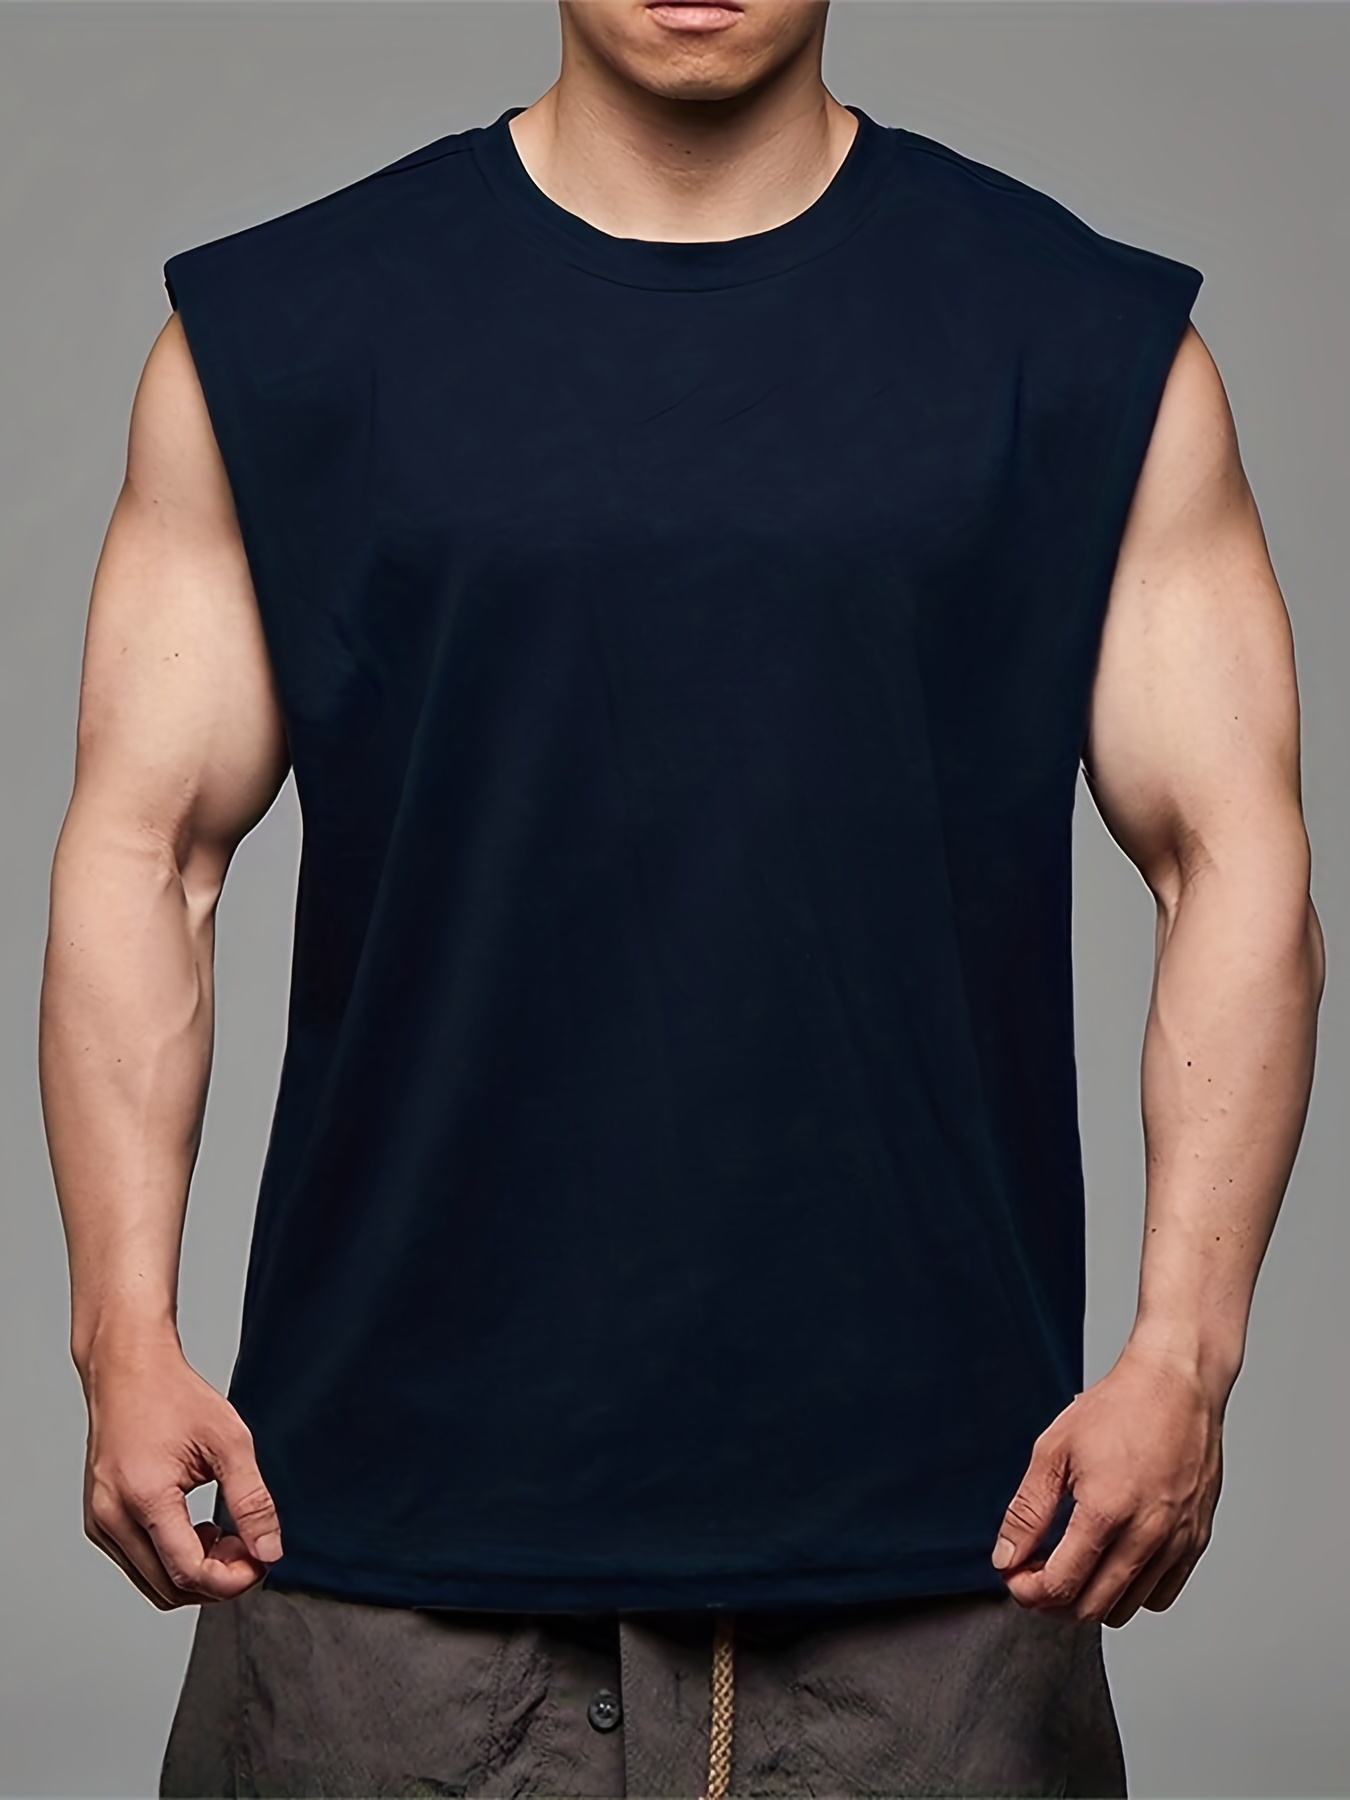 Men Tank Tops Men's Solid V Neck Tank Top Casual Breathable Sleeveless T  Shirt Blue 